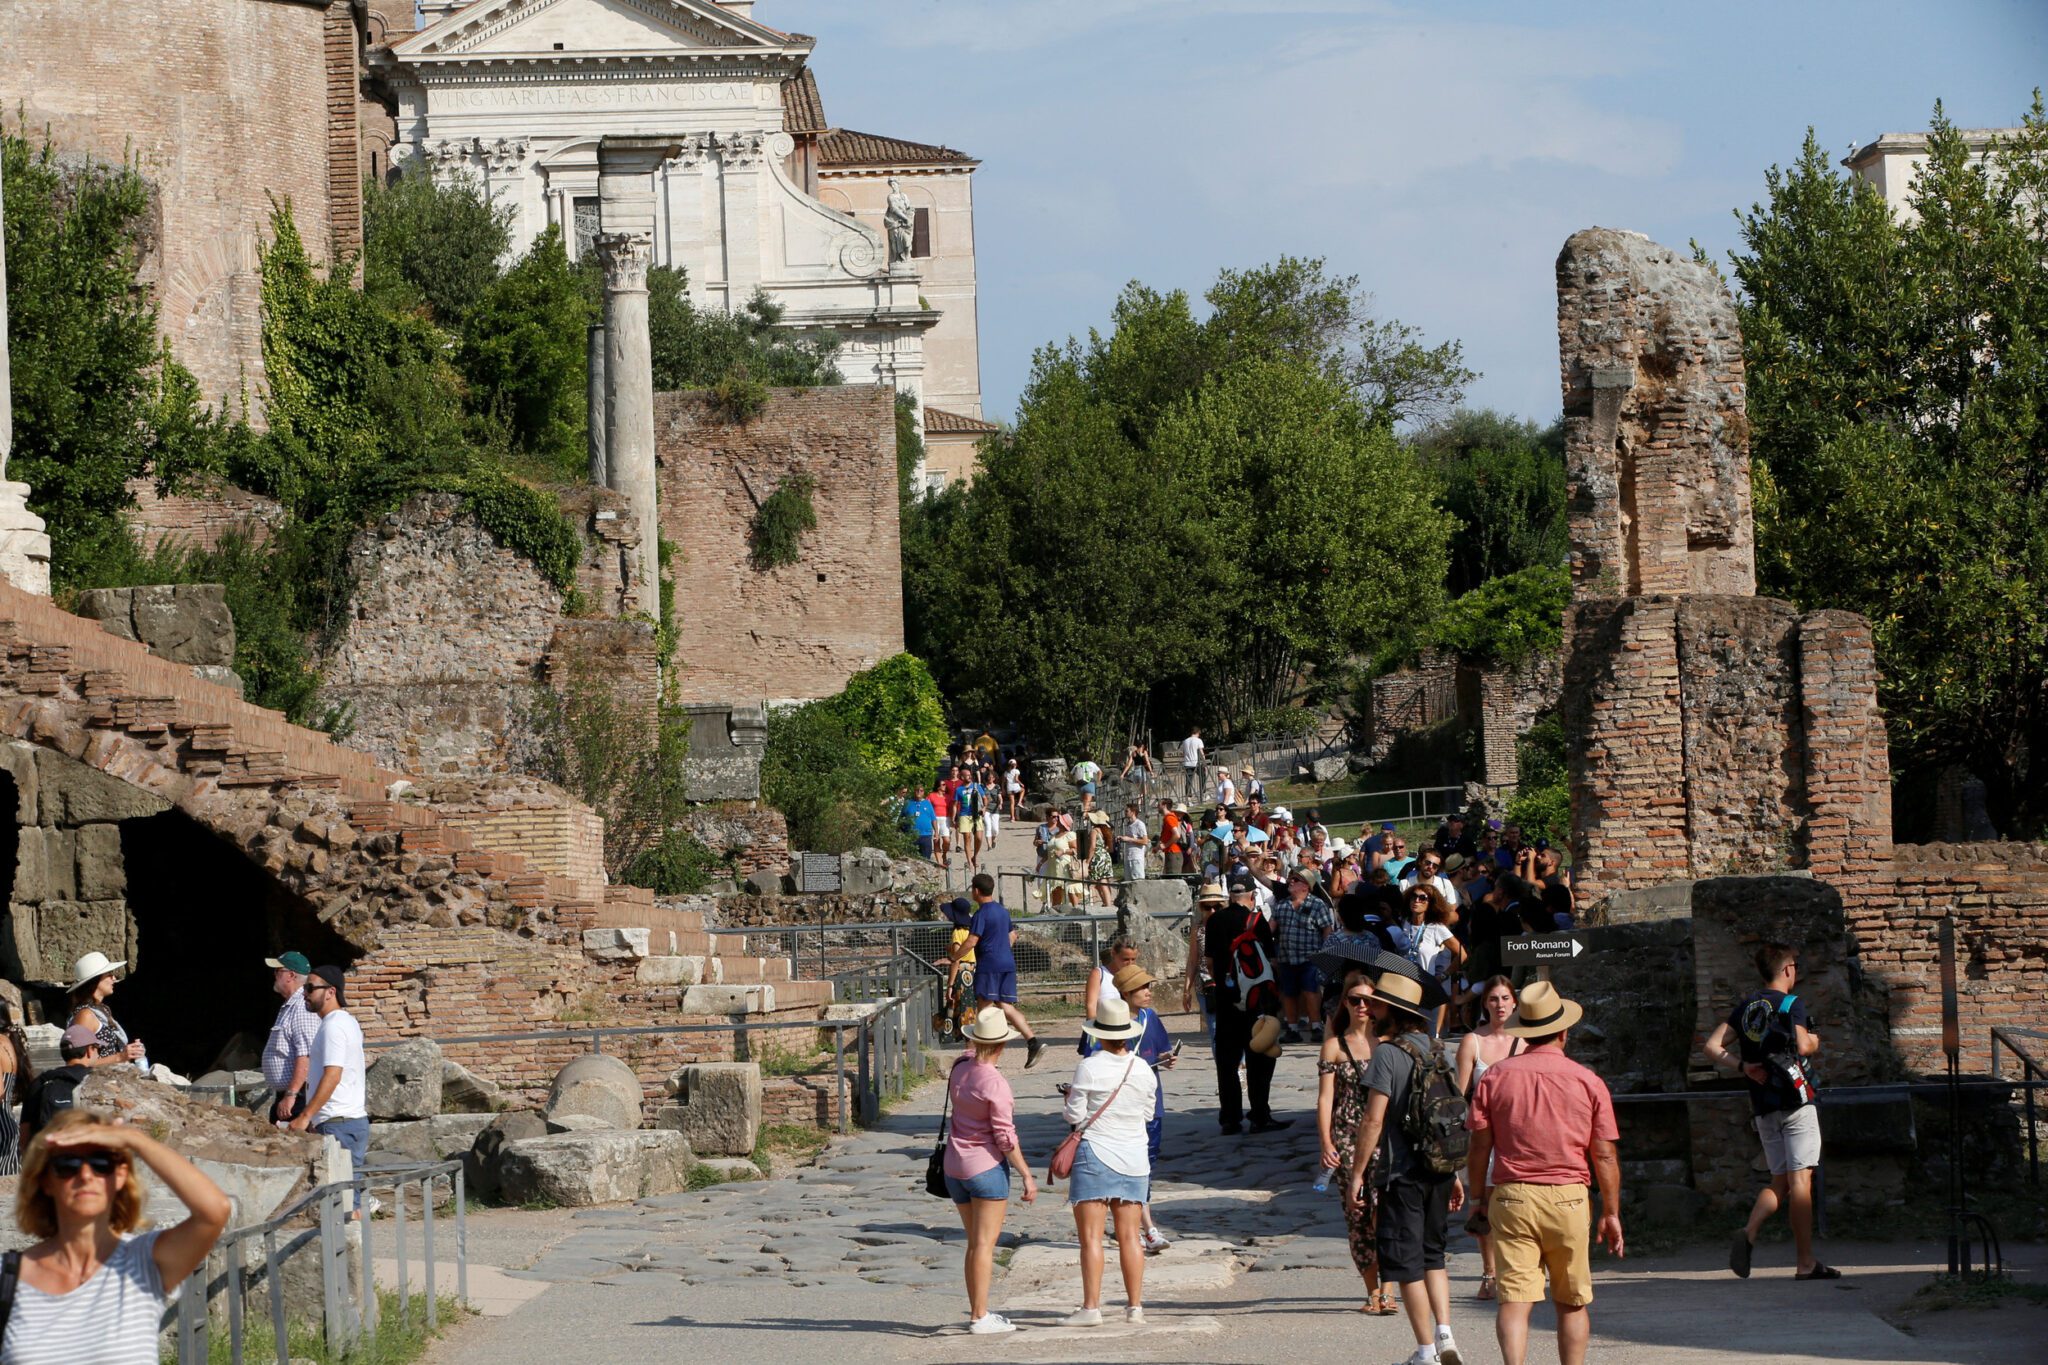 Tourists walk along the Roman Forum. Source: Reiuters